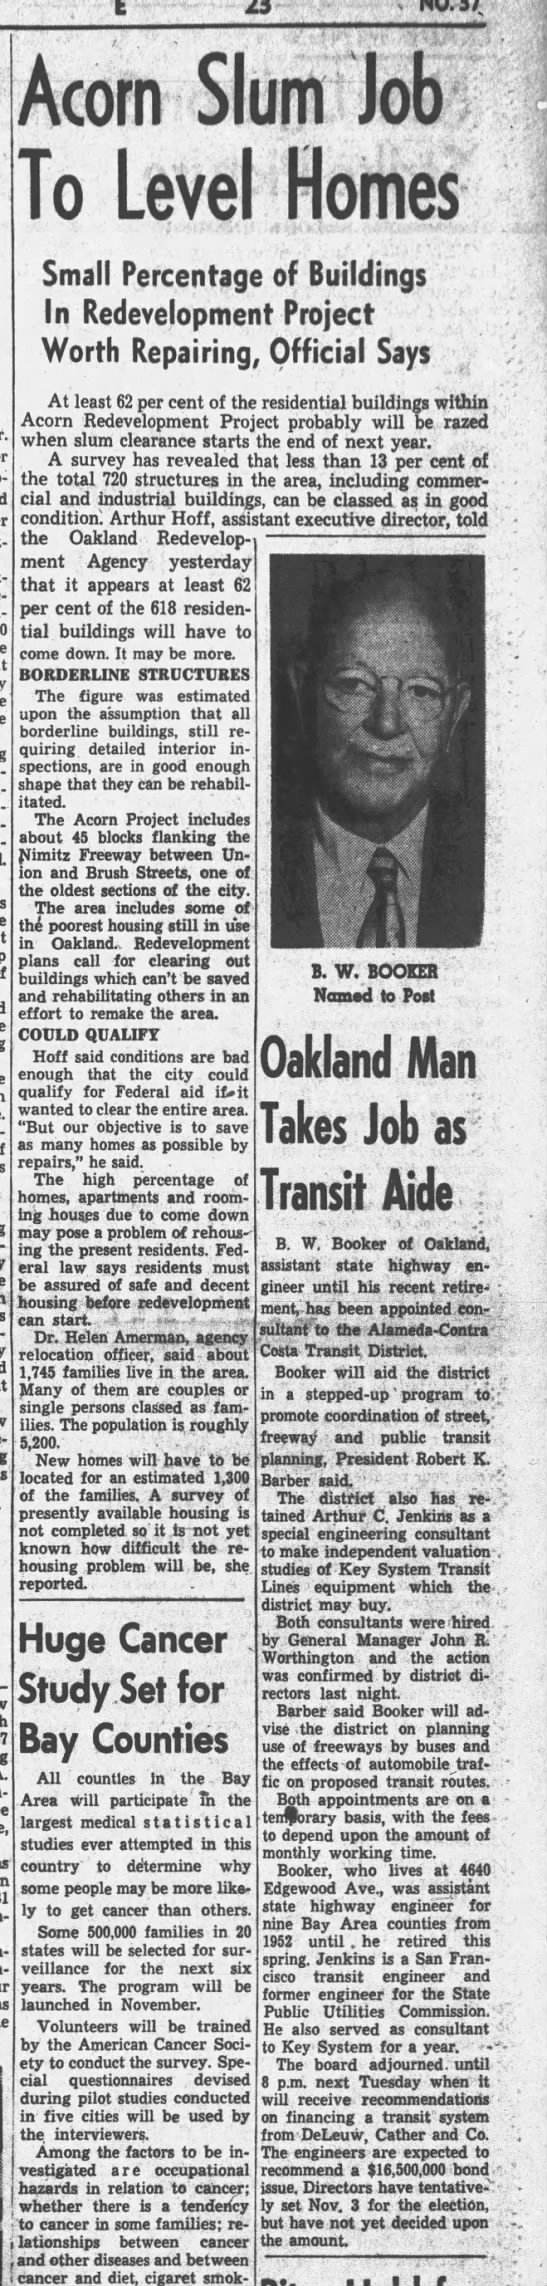 Acorn Slum Job To Level Homes - Oakland Tribune Aug 6, 1959 - 